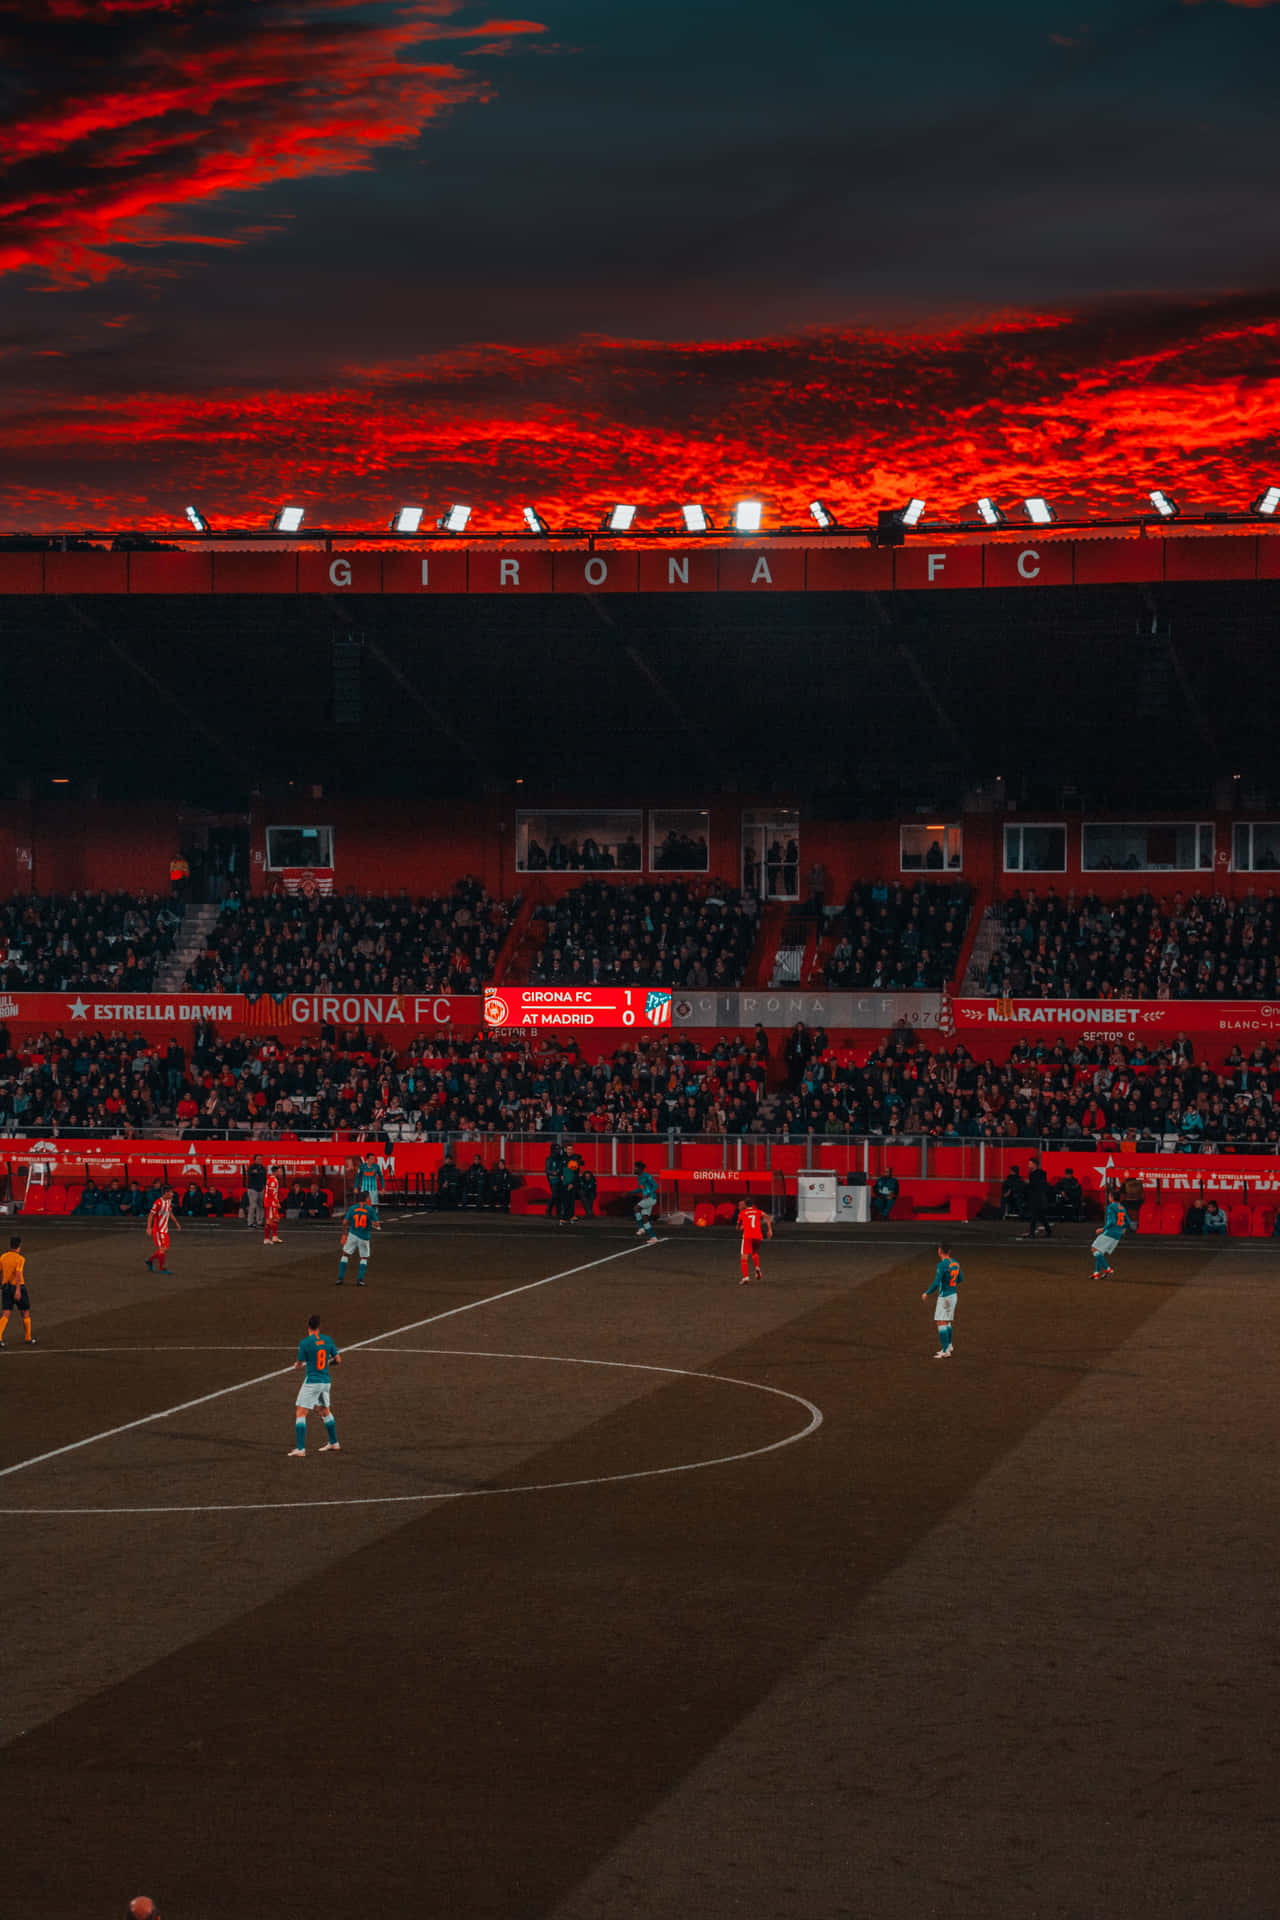 Captivating Soccer Stadium at Sunset